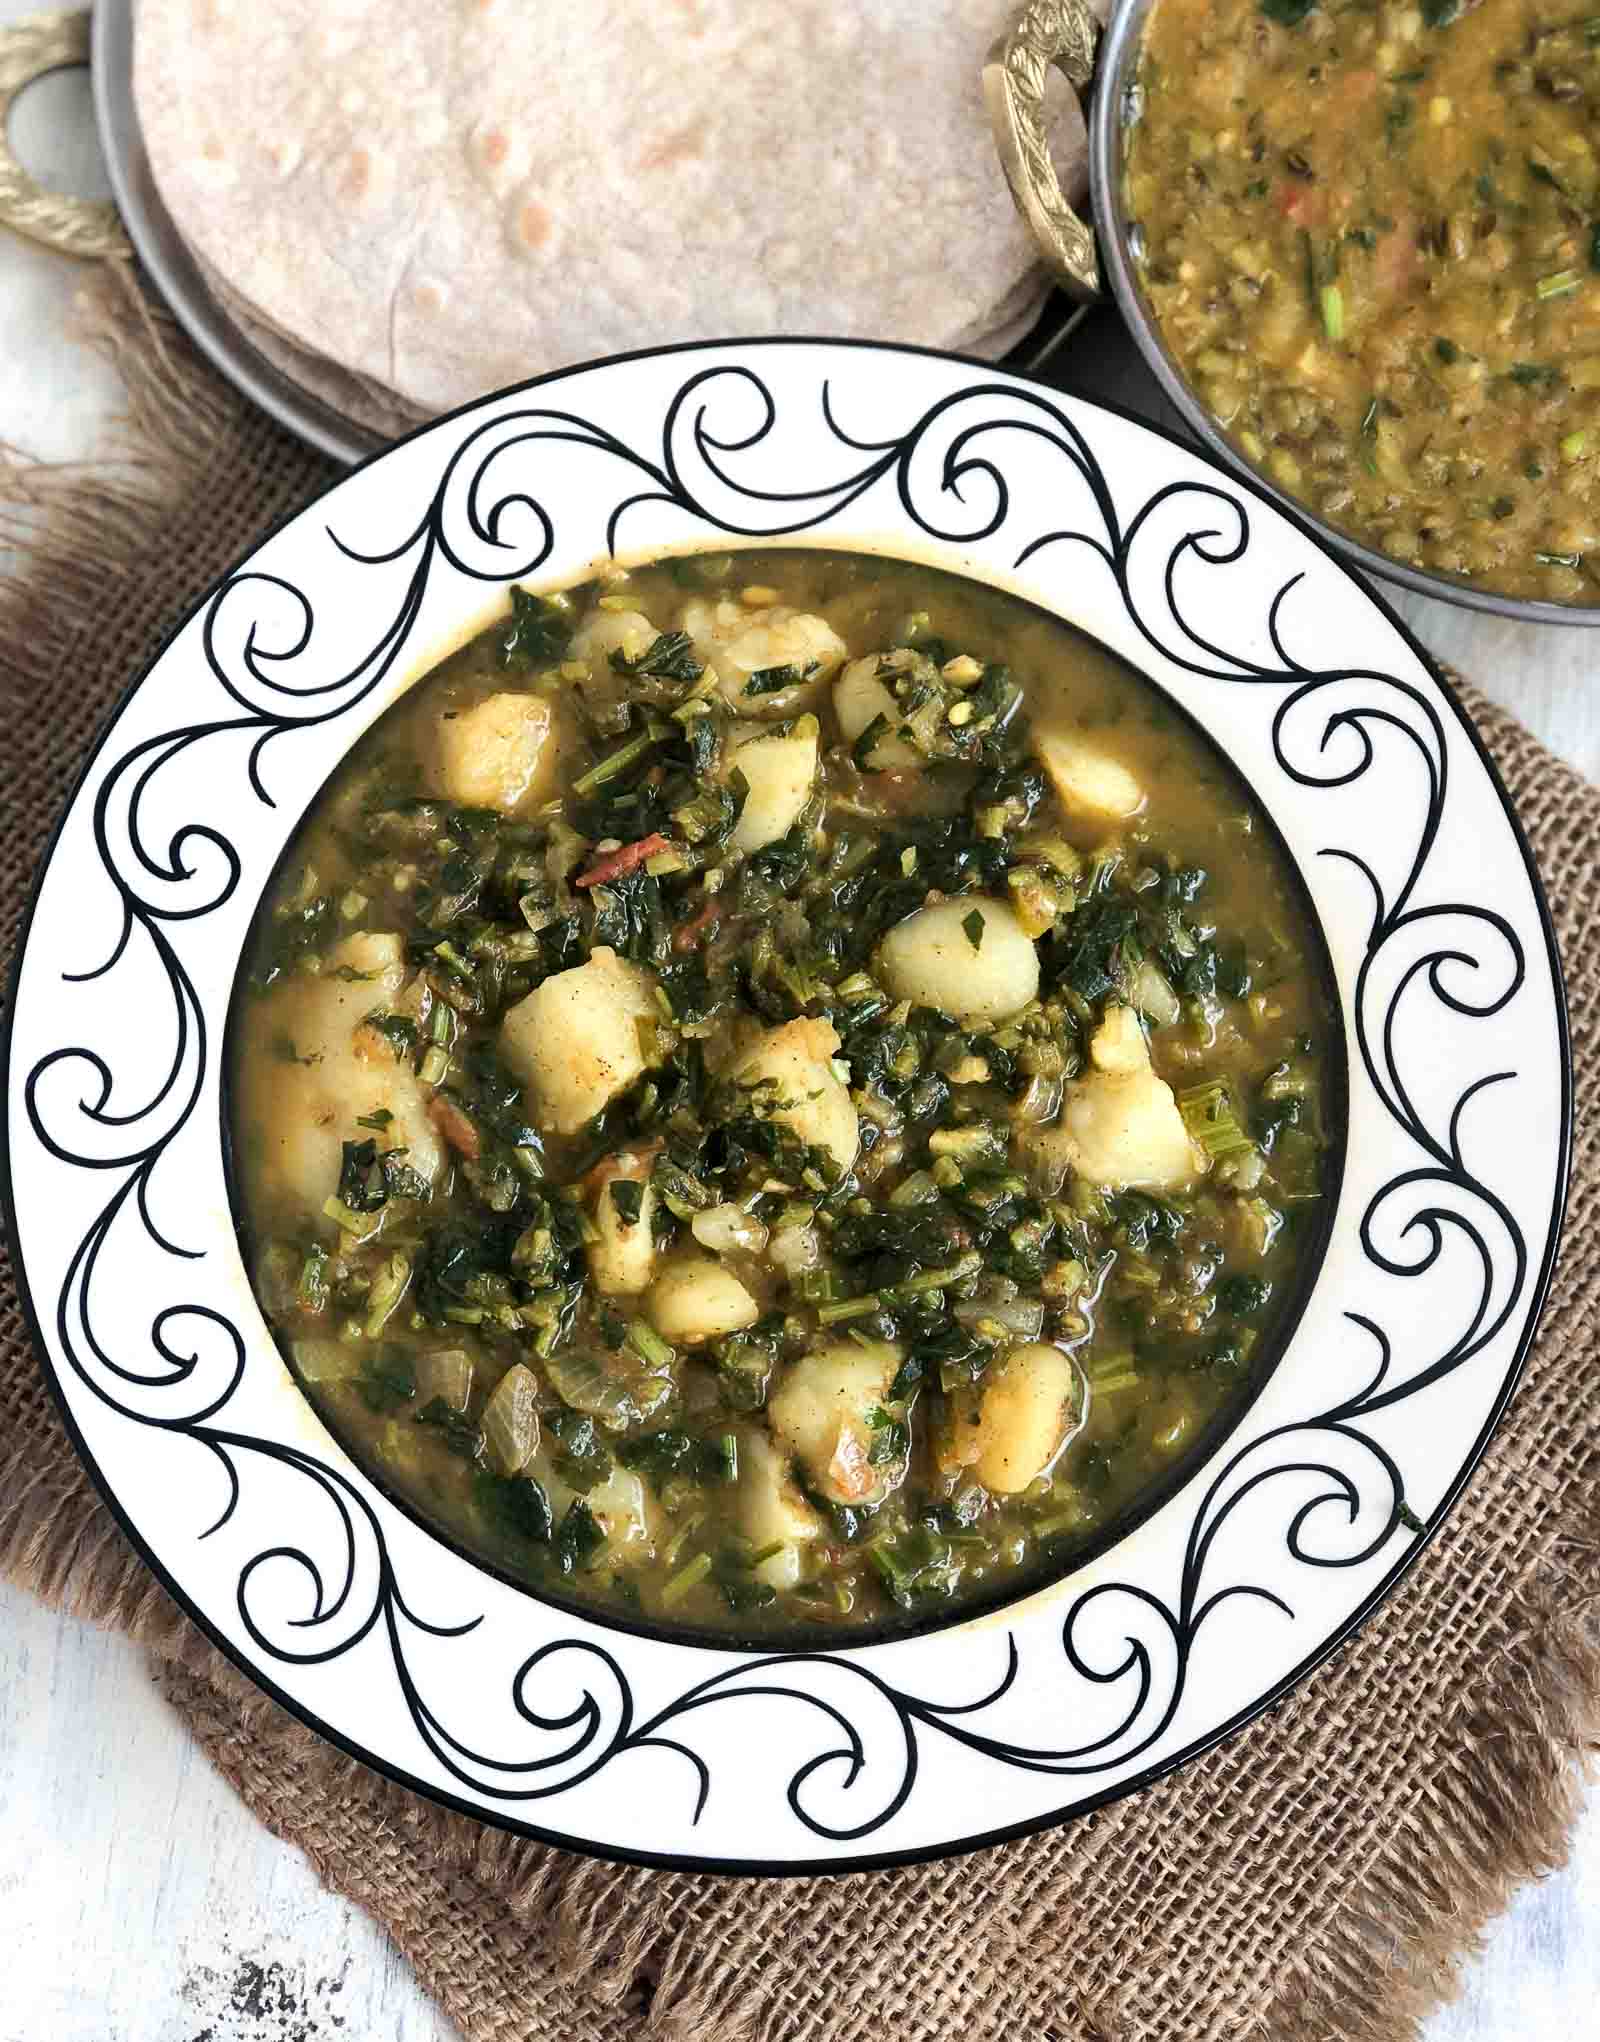 Aloo Methi Masala Recipe - Potato & Fenugreek Leaves Gravy